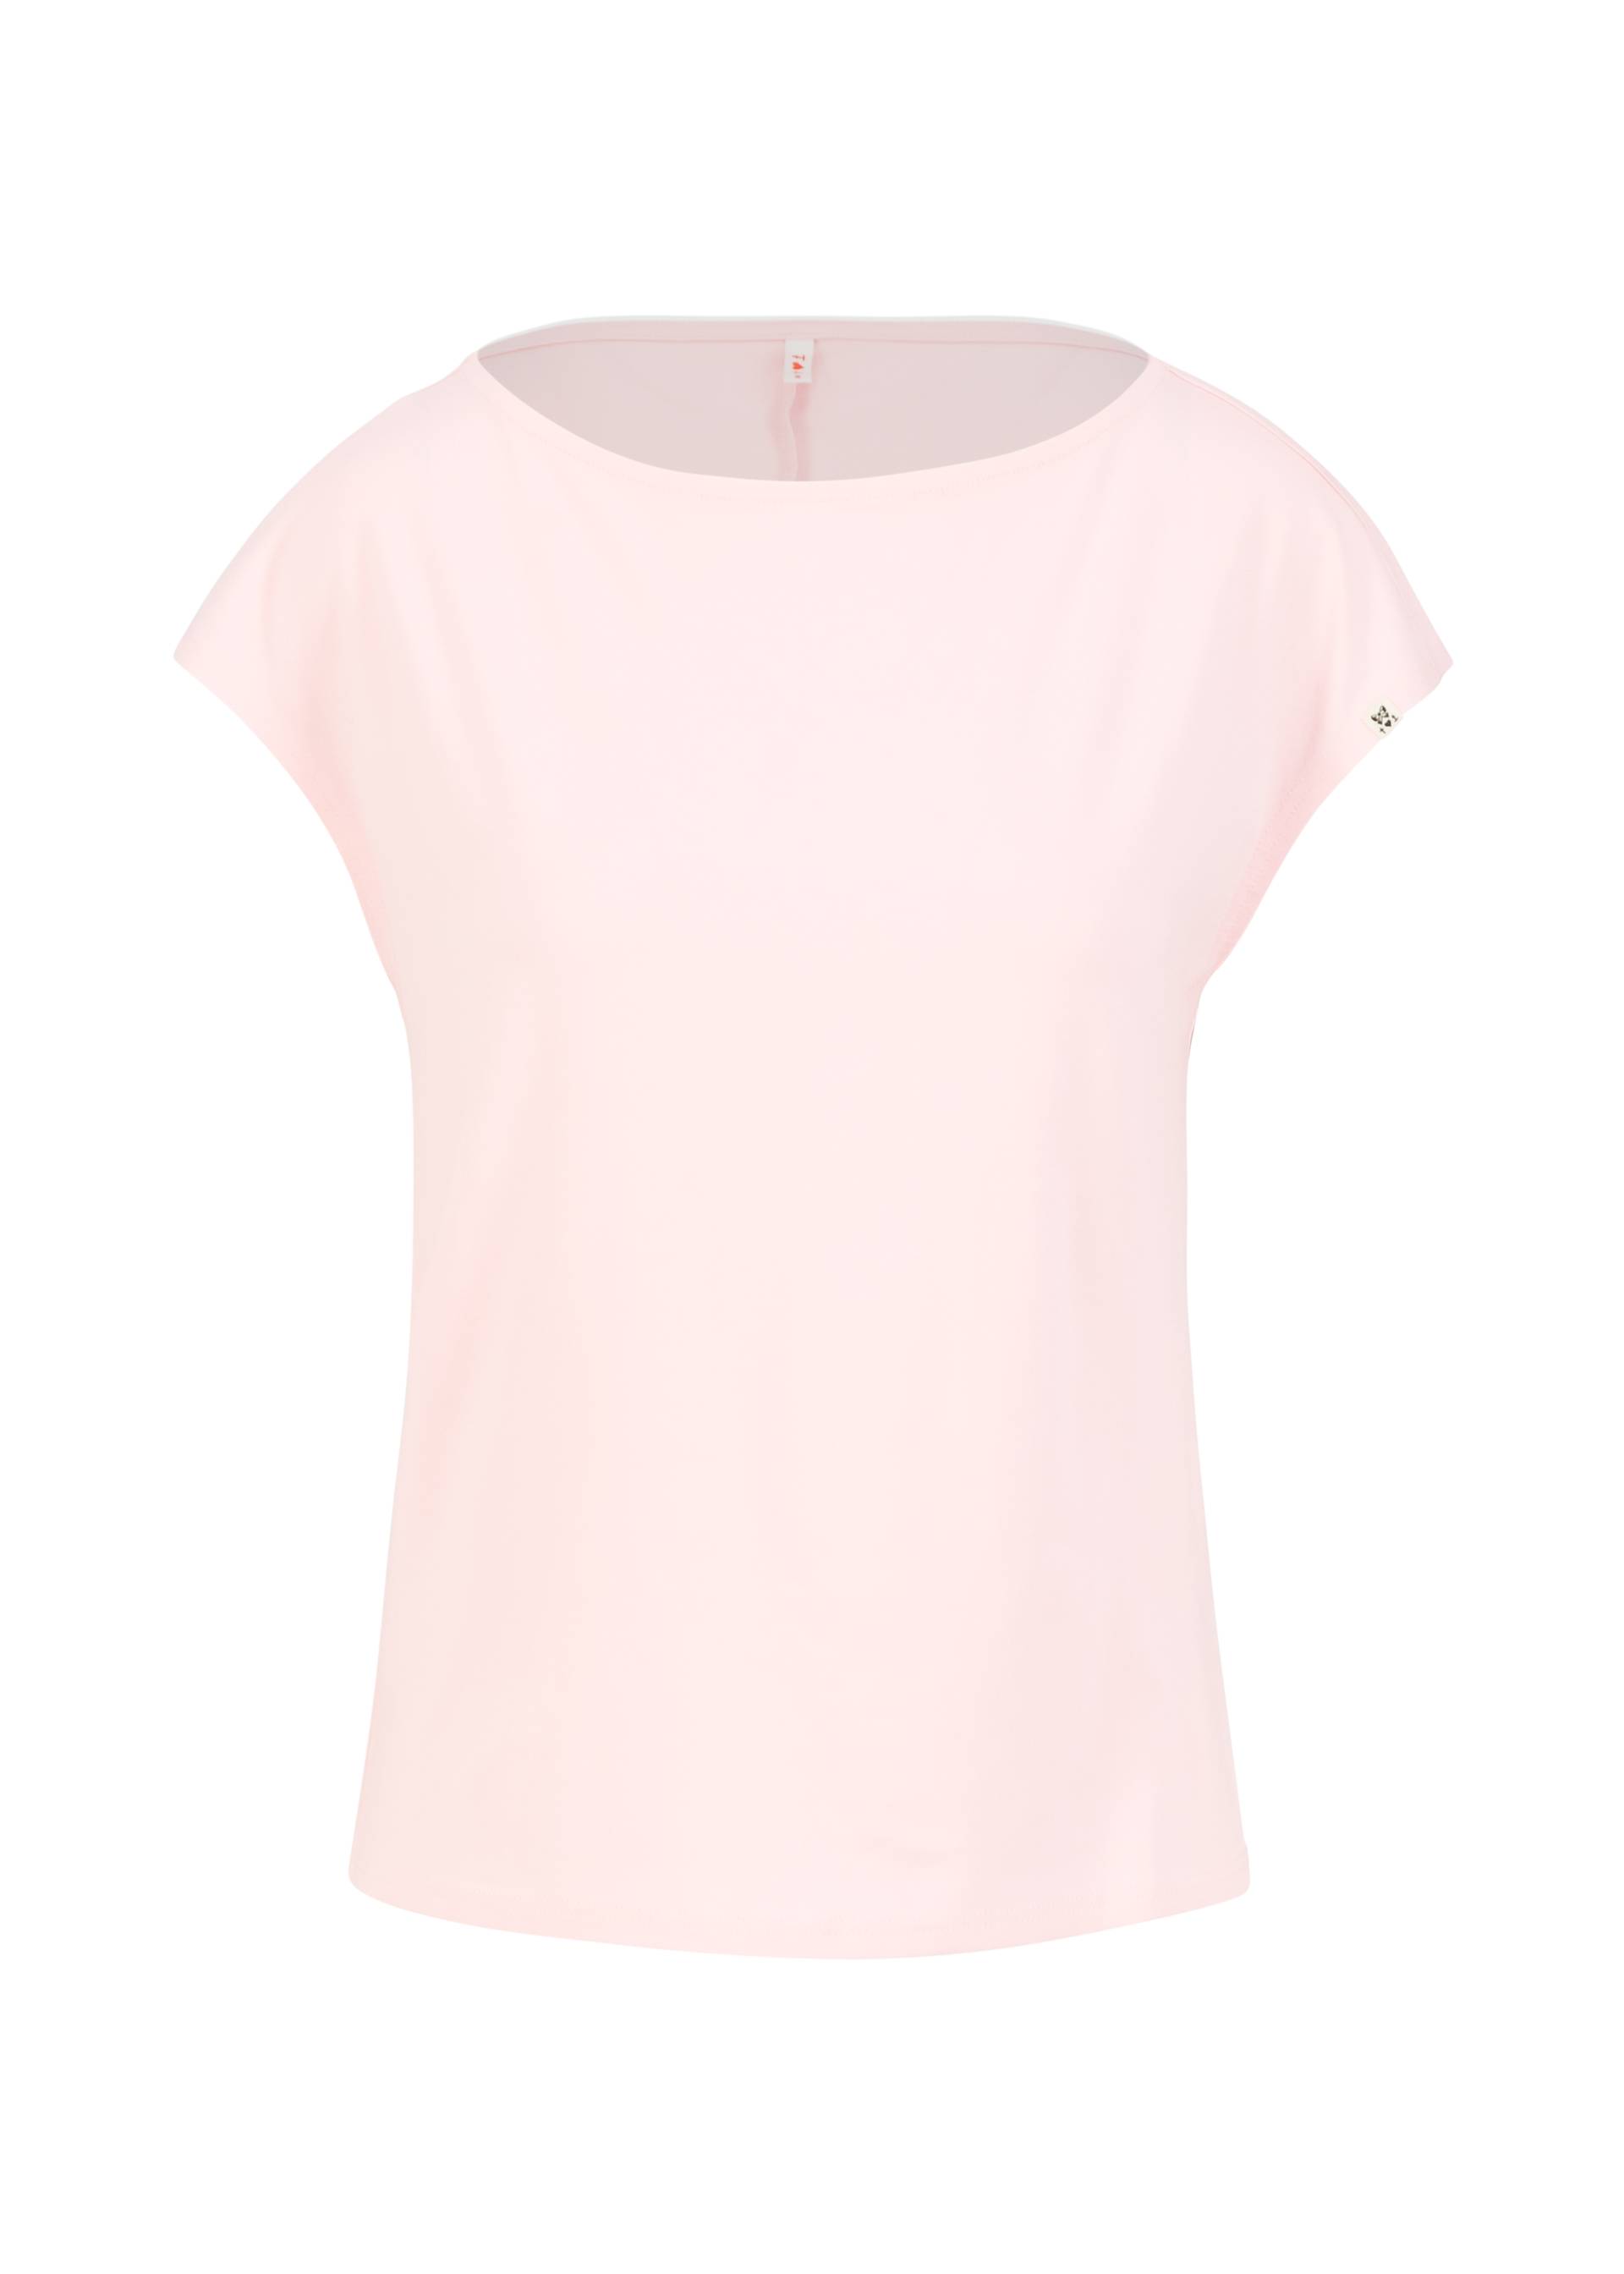 Shirt Breezy Flowgirl, baby pink, Shirts, Rosa